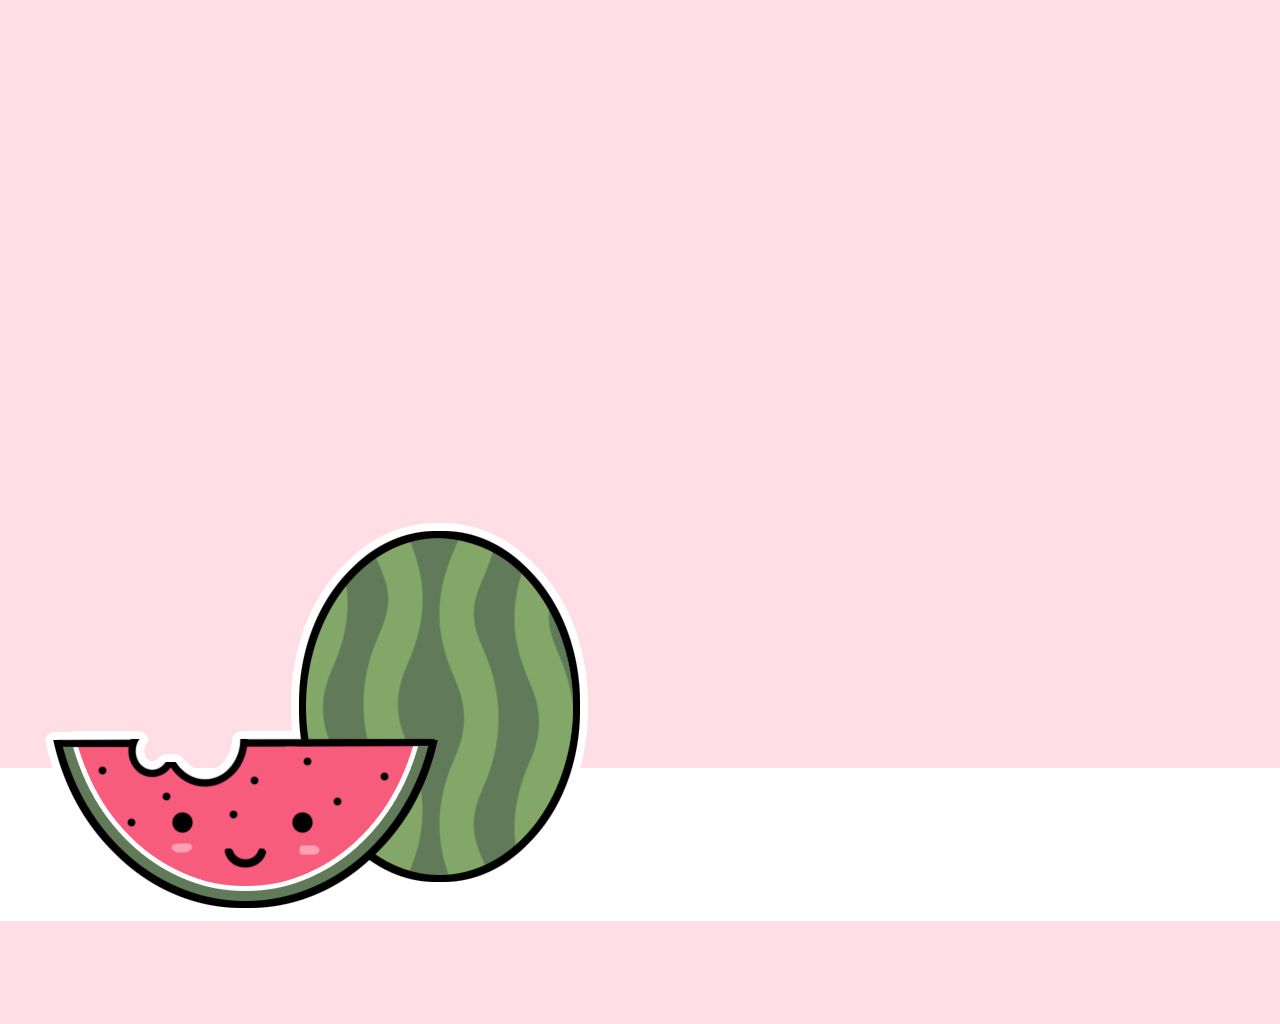 Kawaii Wallpaper: Watermelon. Watermelon wallpaper, Tumblr background, Powerpoint background design